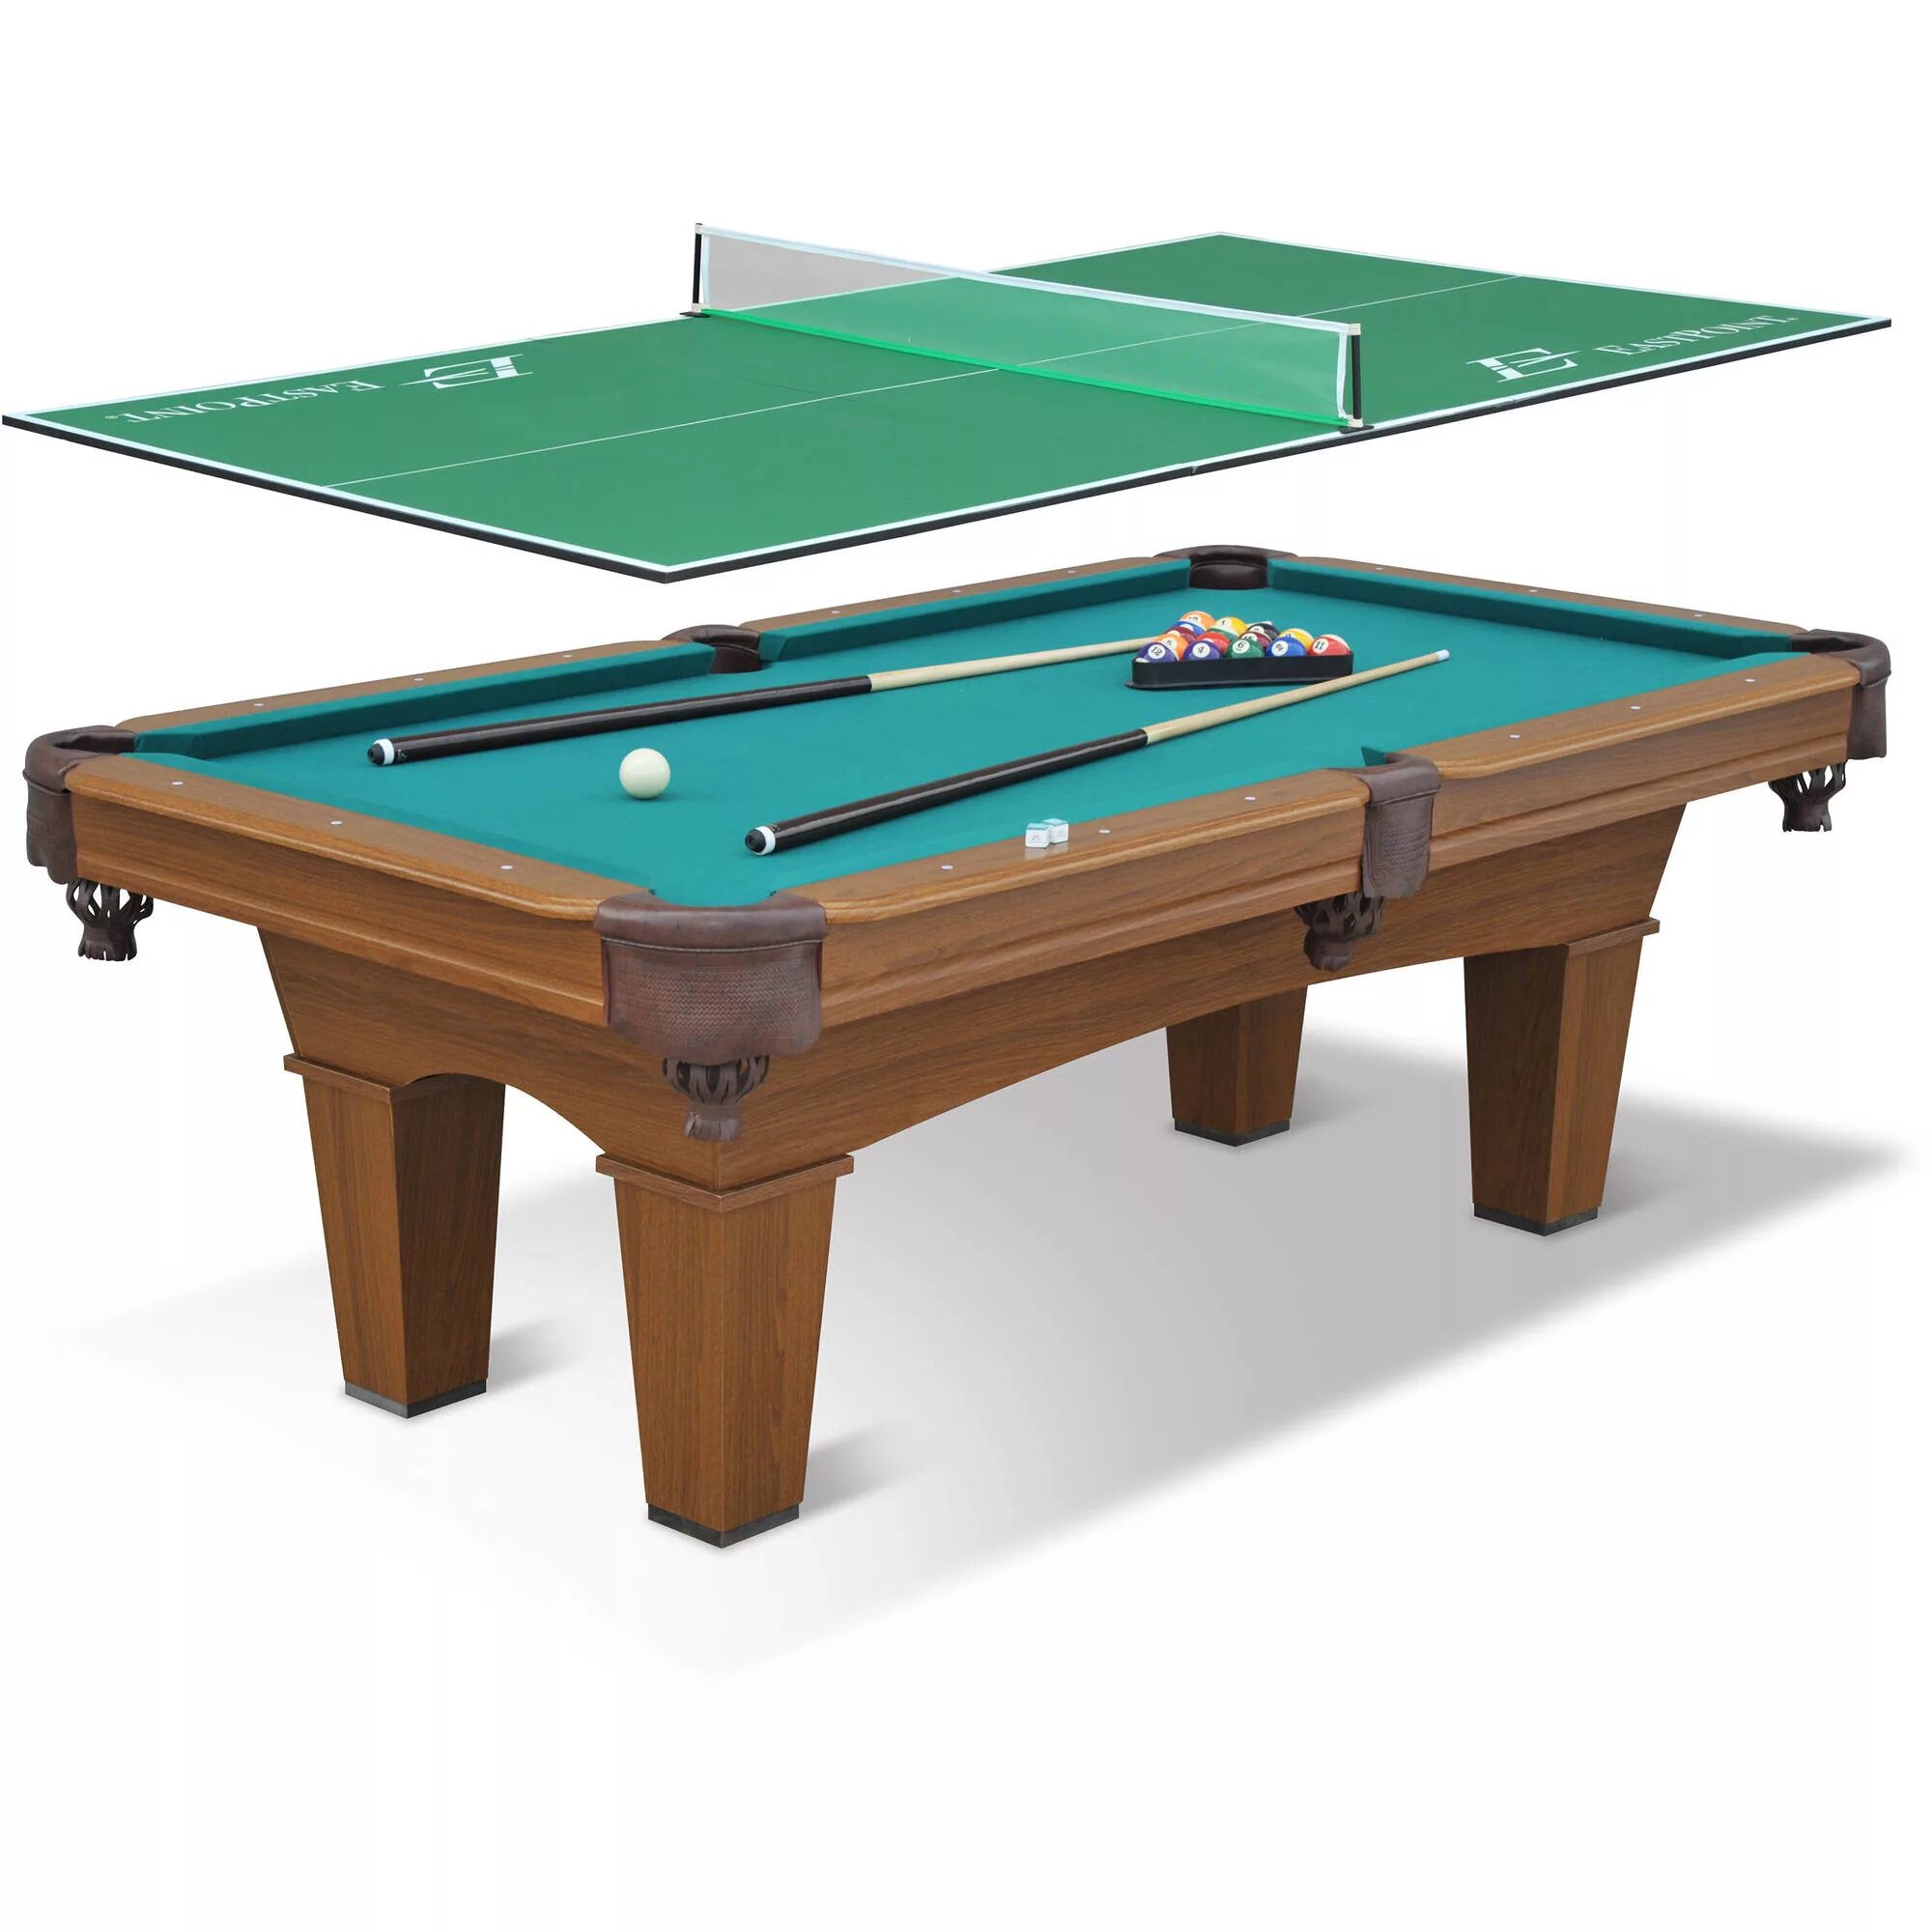 Billiard Pool Table. Игровой стол теннис биллиард. Baulk Billiard Table. Комплектующие для бильярдного стола.